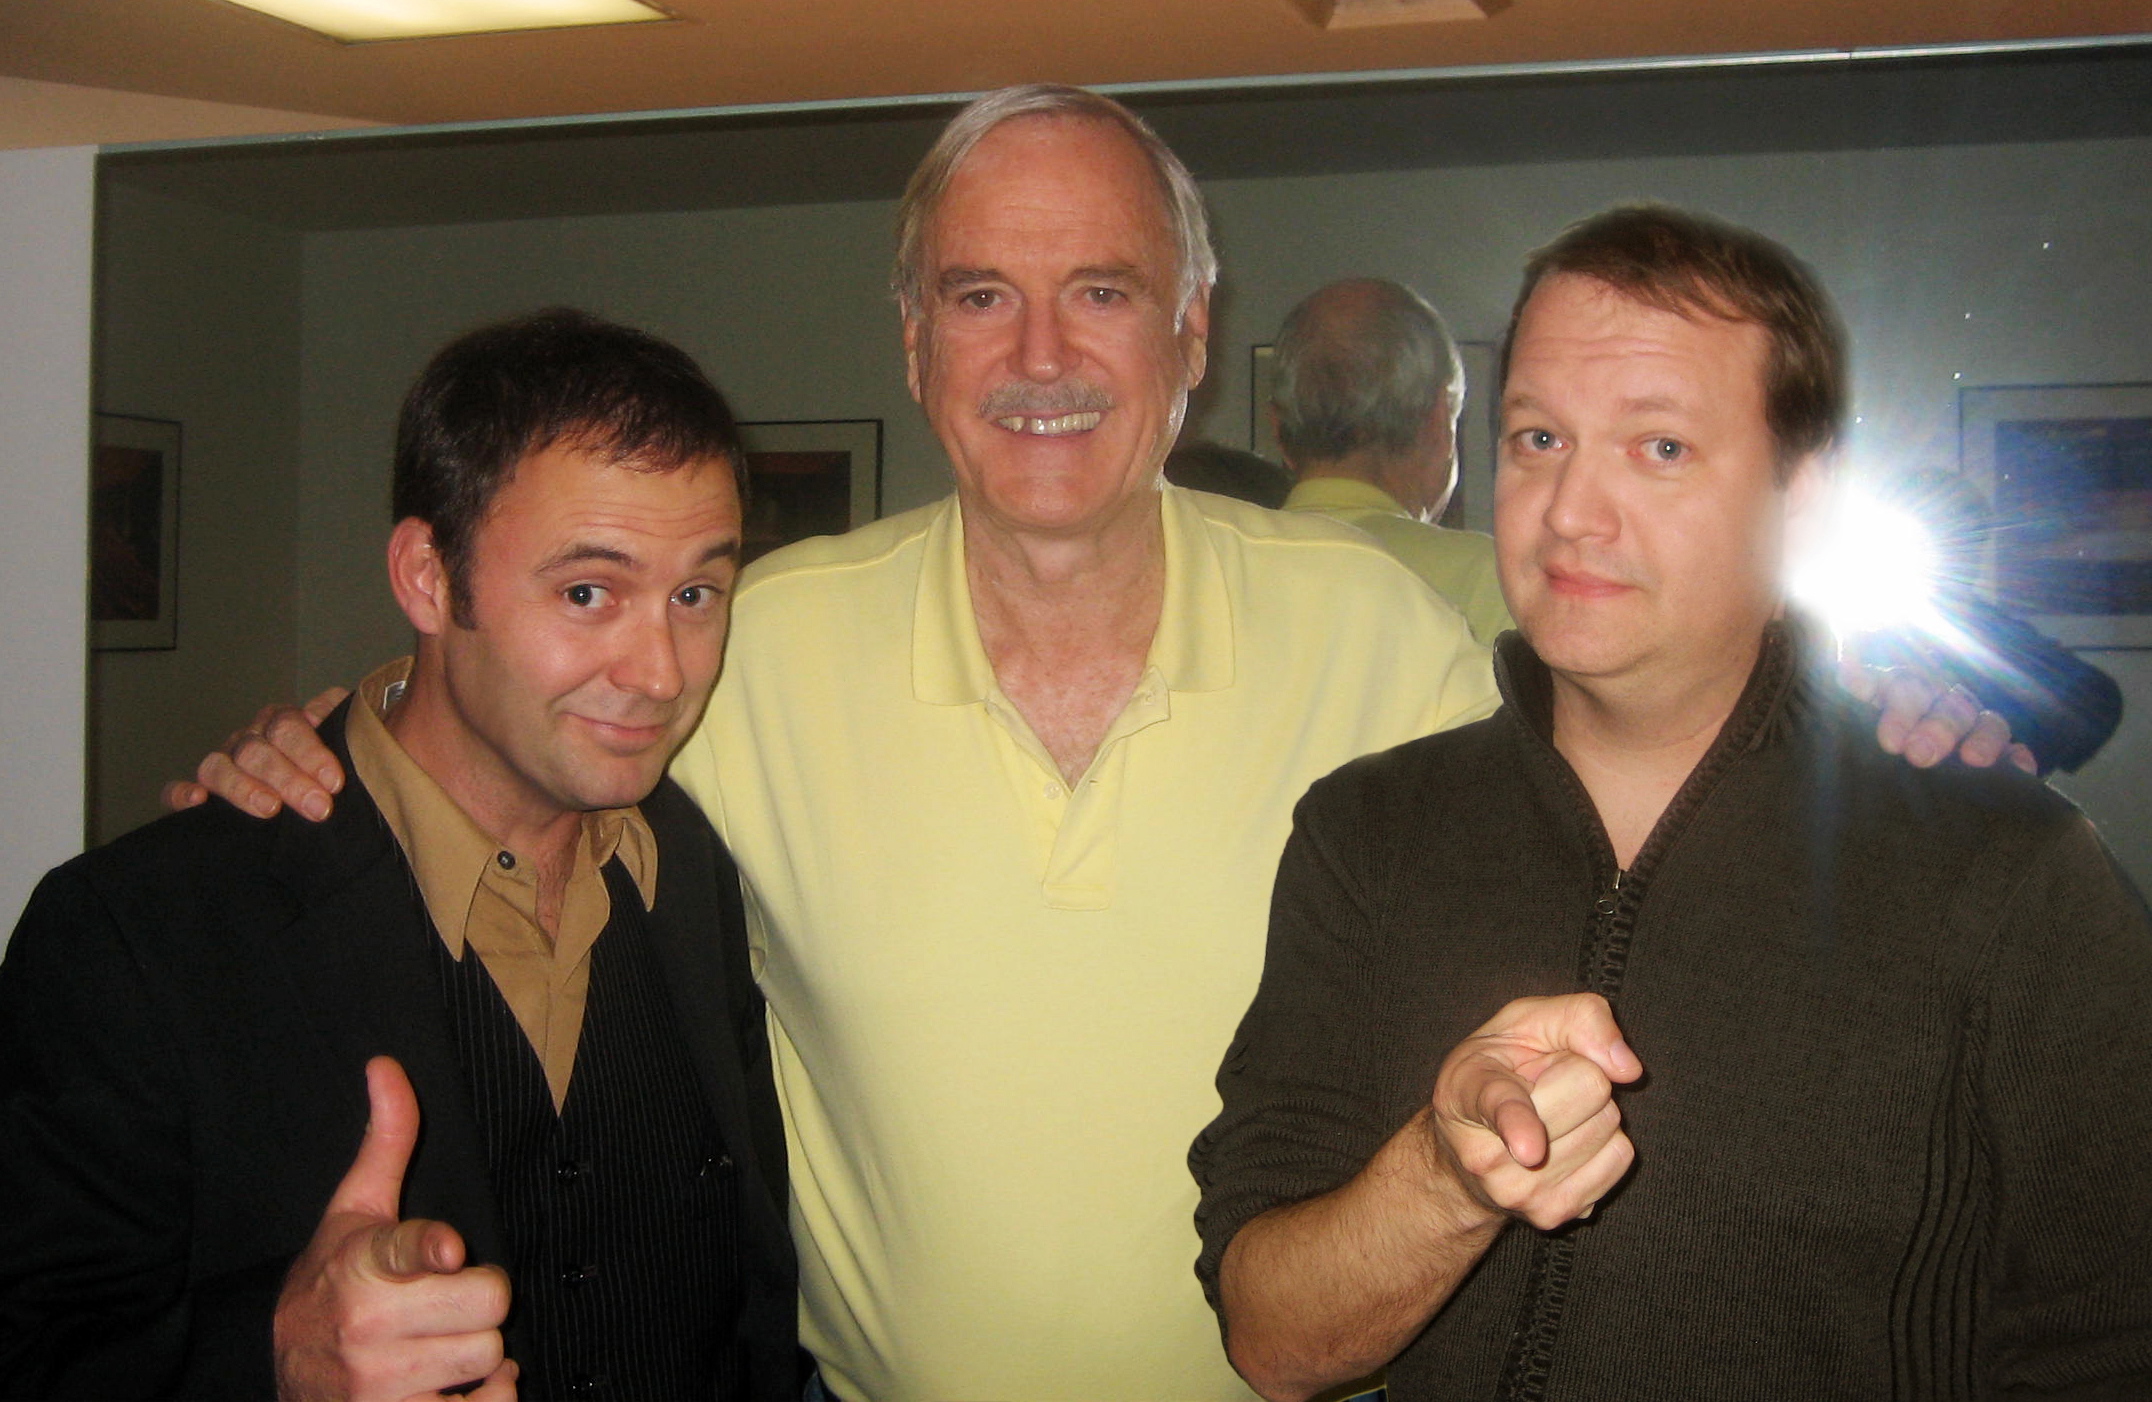 Tom Konkle backstage with John Cleese and David Beeler